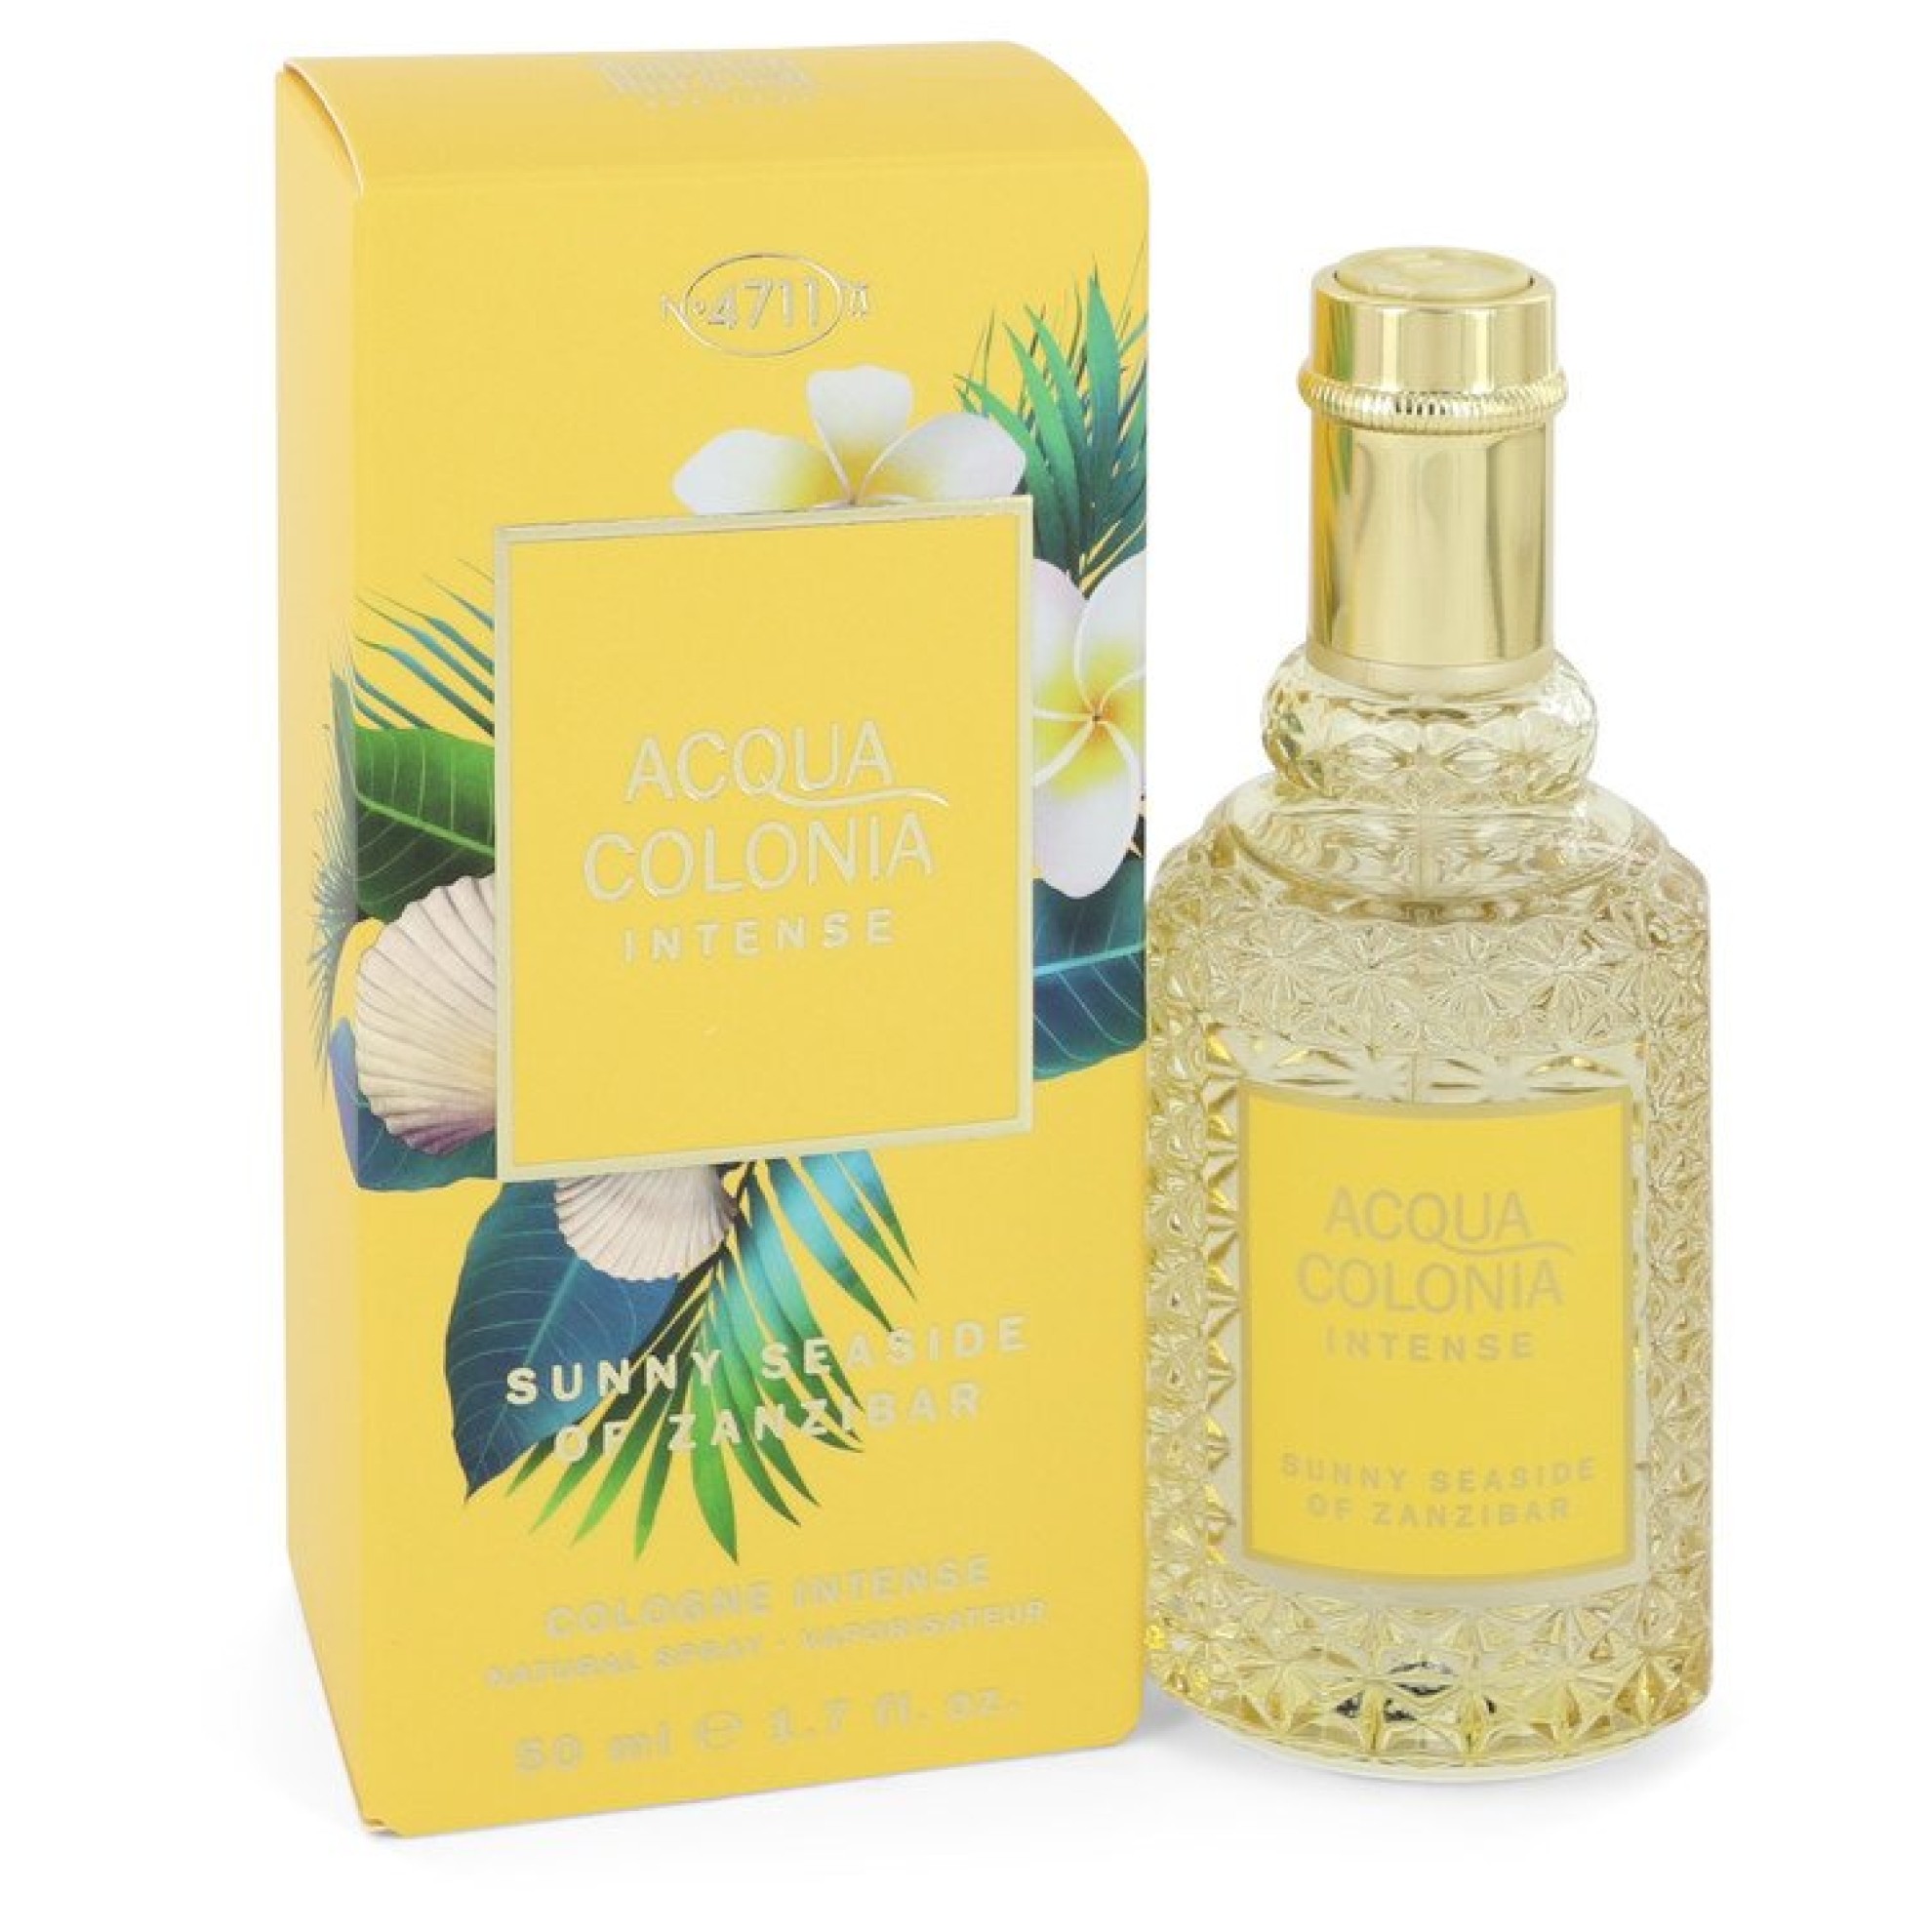 Image of 4711 Acqua Colonia Sunny Seaside of Zanzibar Eau De Cologne Intense Spray (Unisex) 50 ml von XXL-Parfum.ch